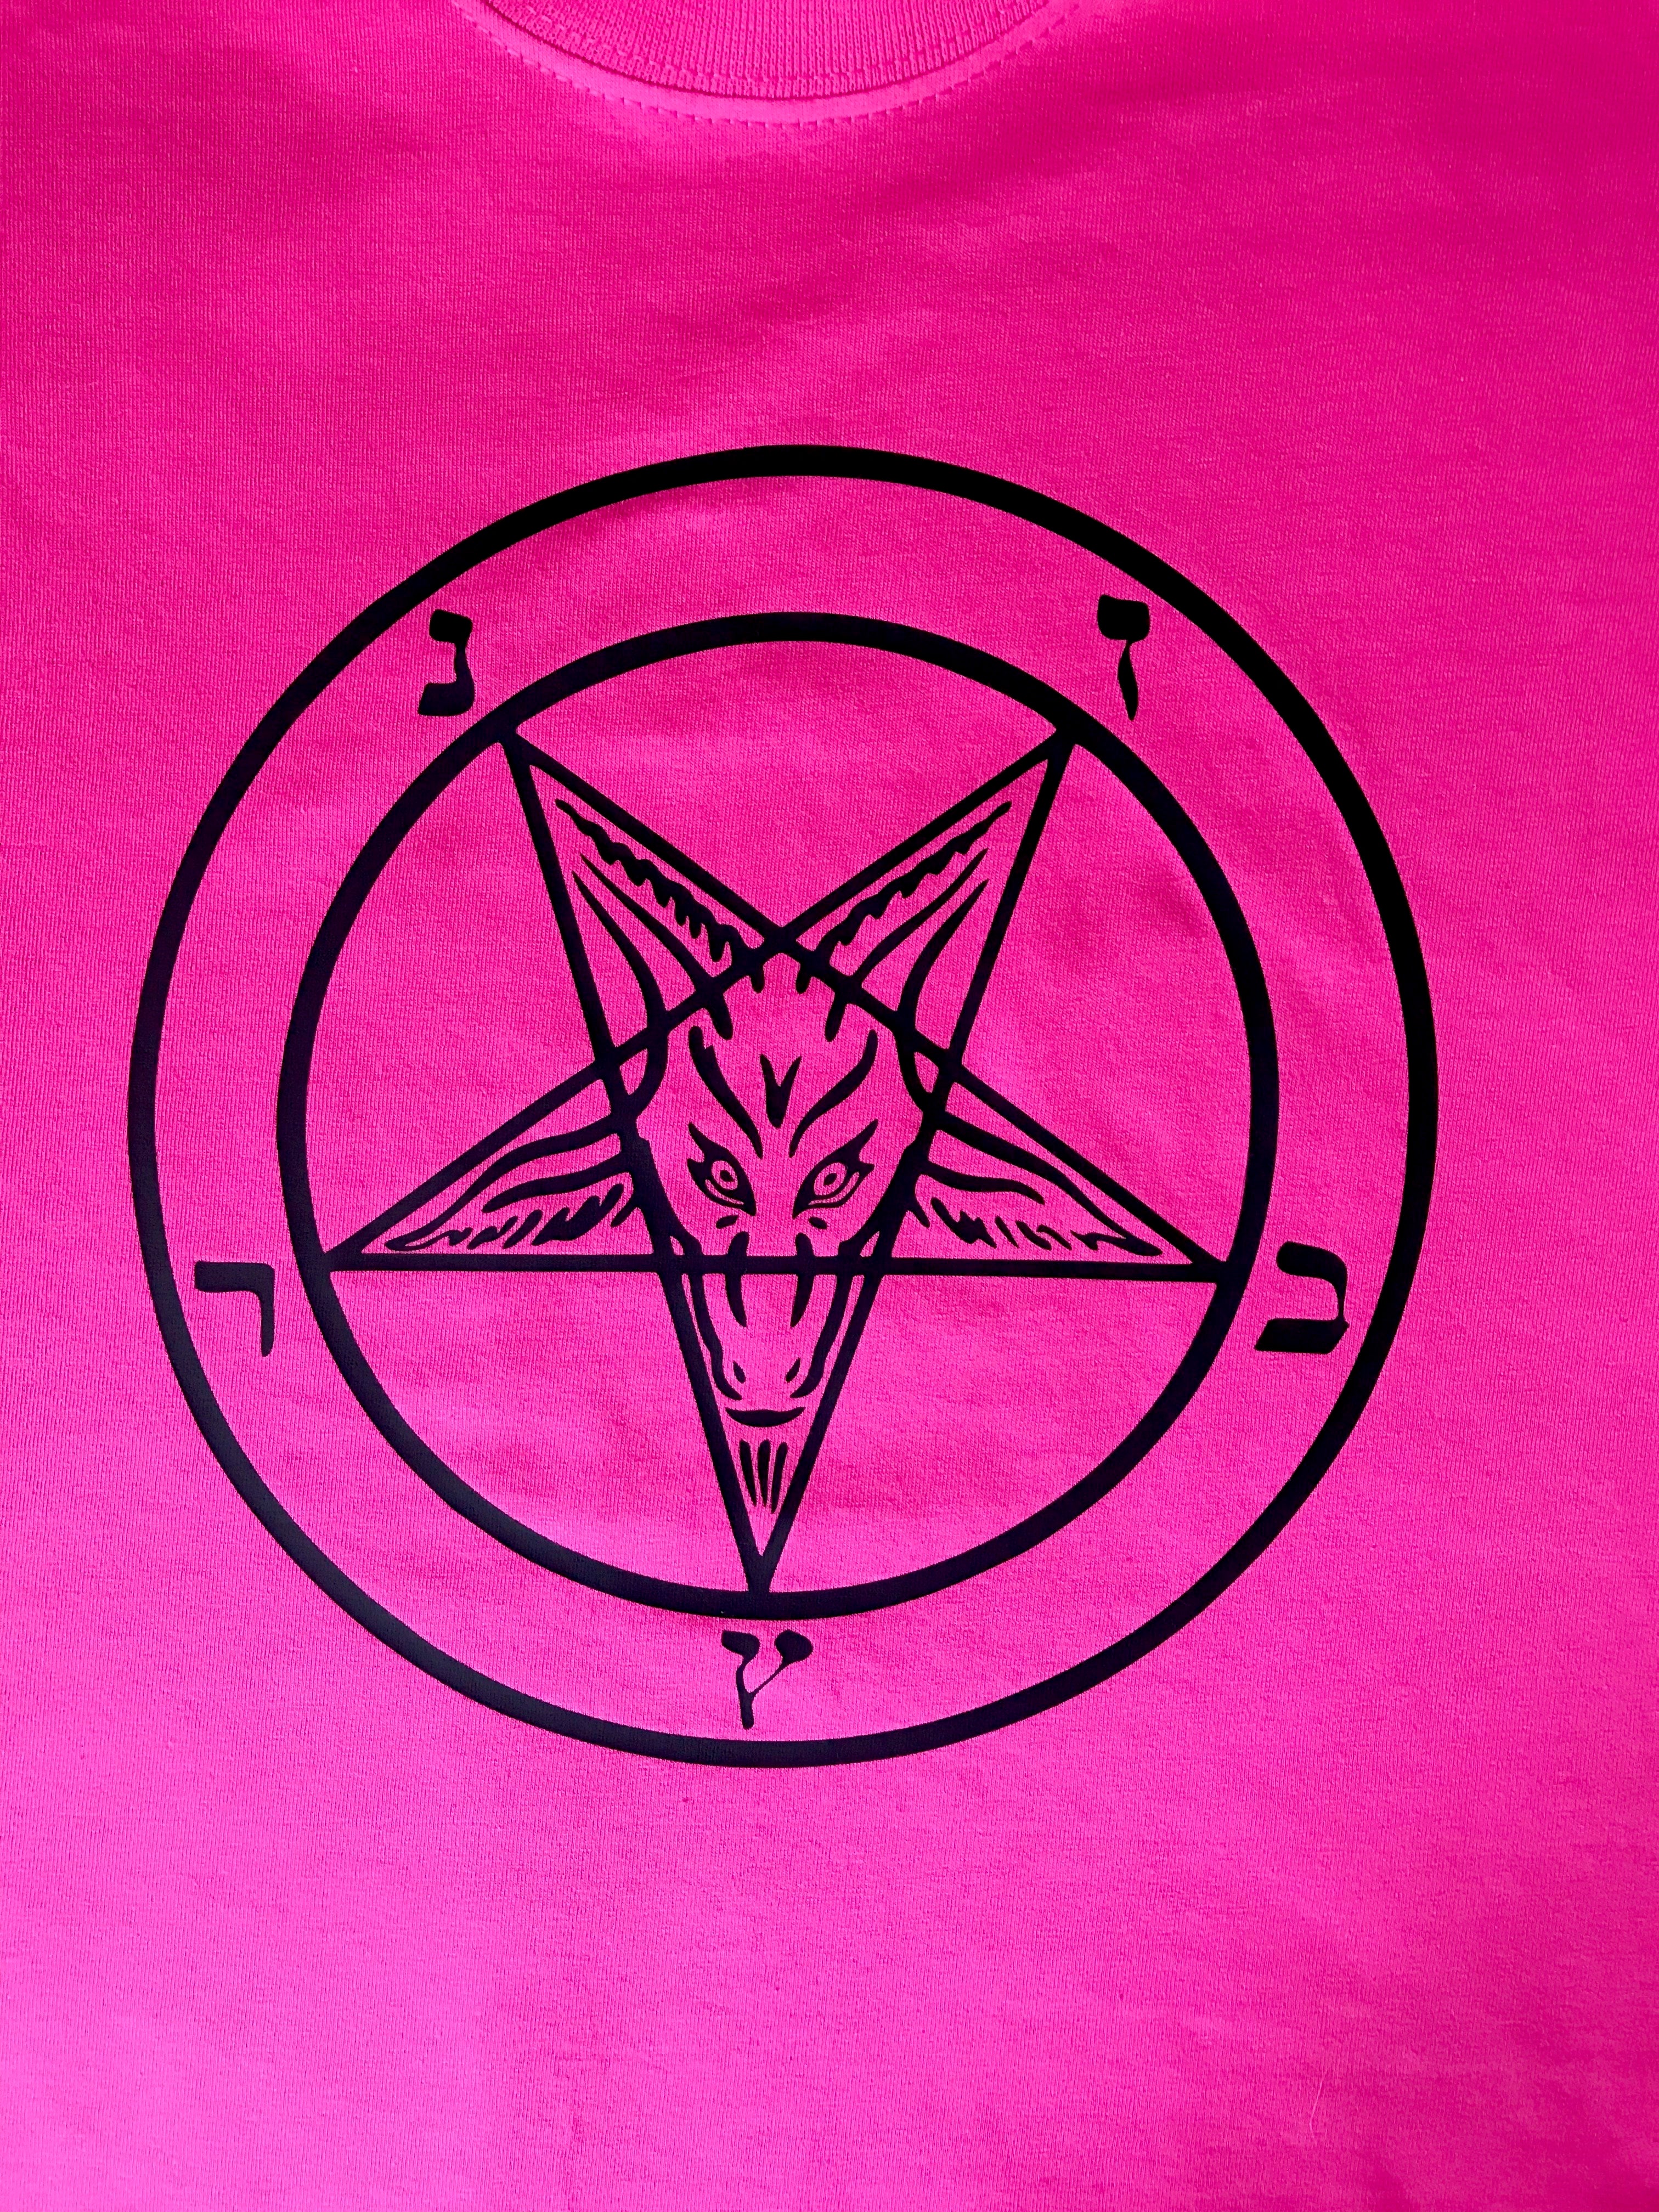 Baphomet pentagram T shirt-men woman T shirts-DiamondsKT